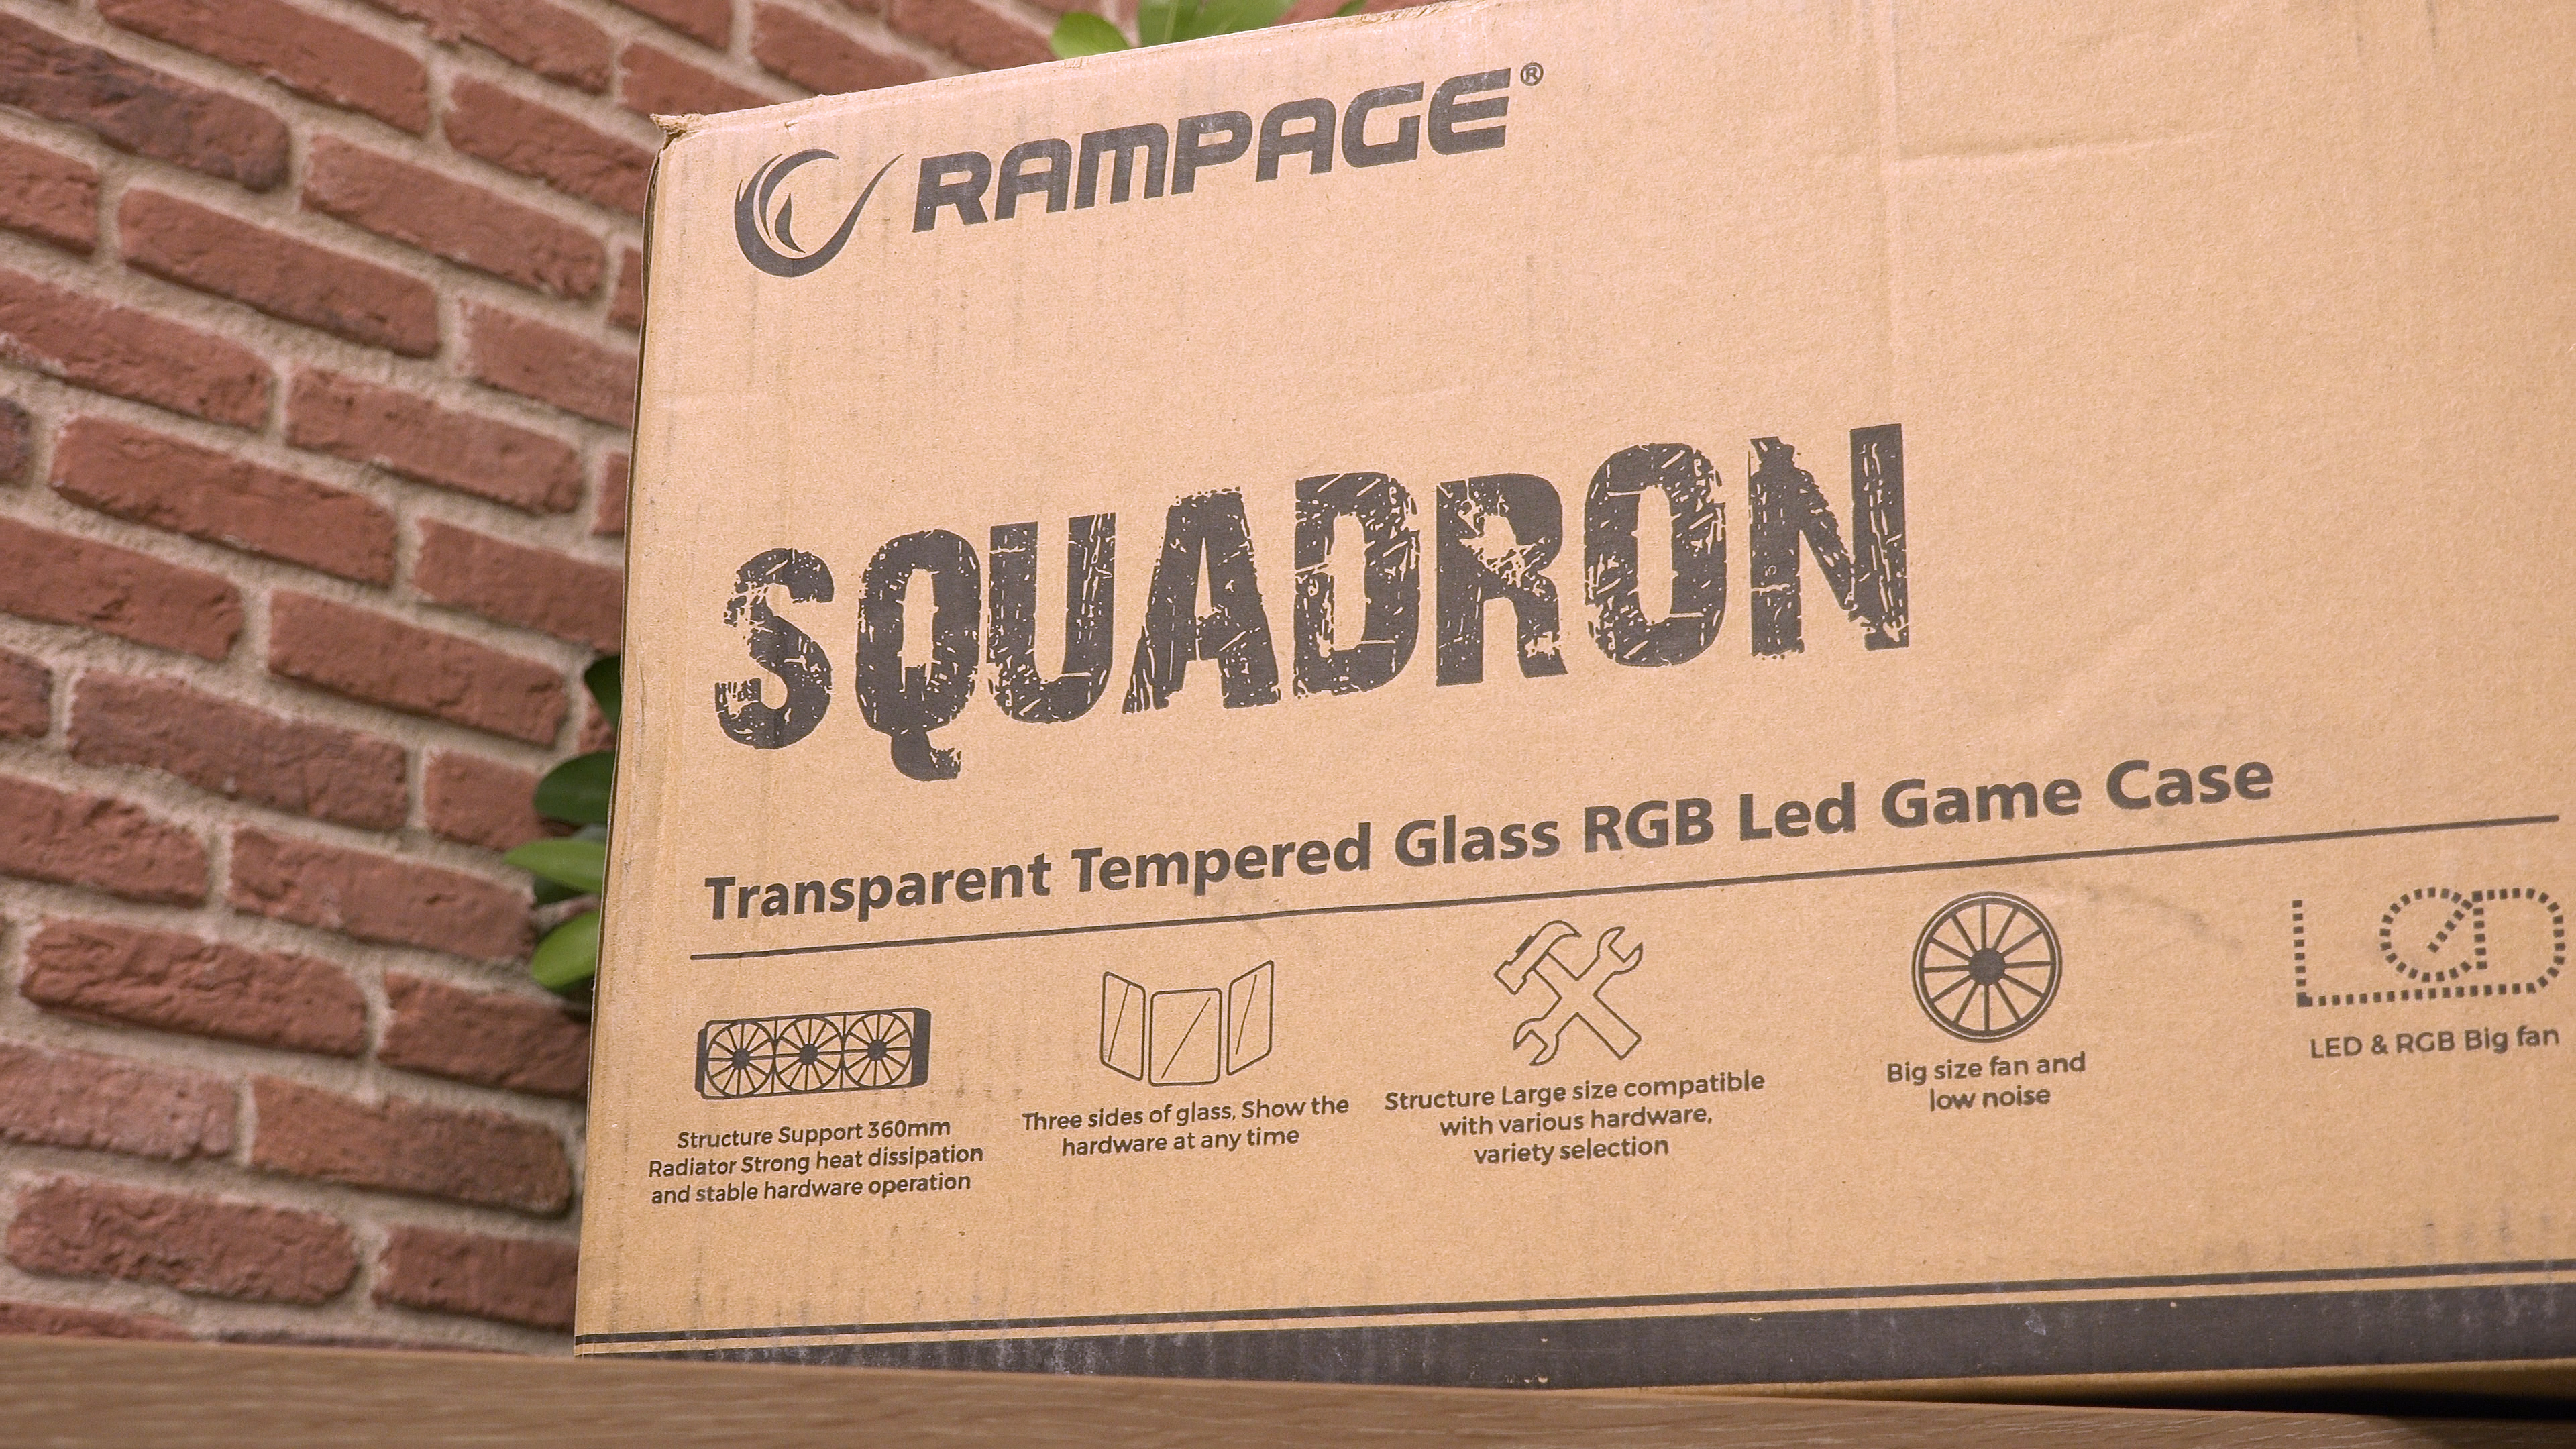 Temperli cam ve RGB 'Rampage Squadron'a göz attık'